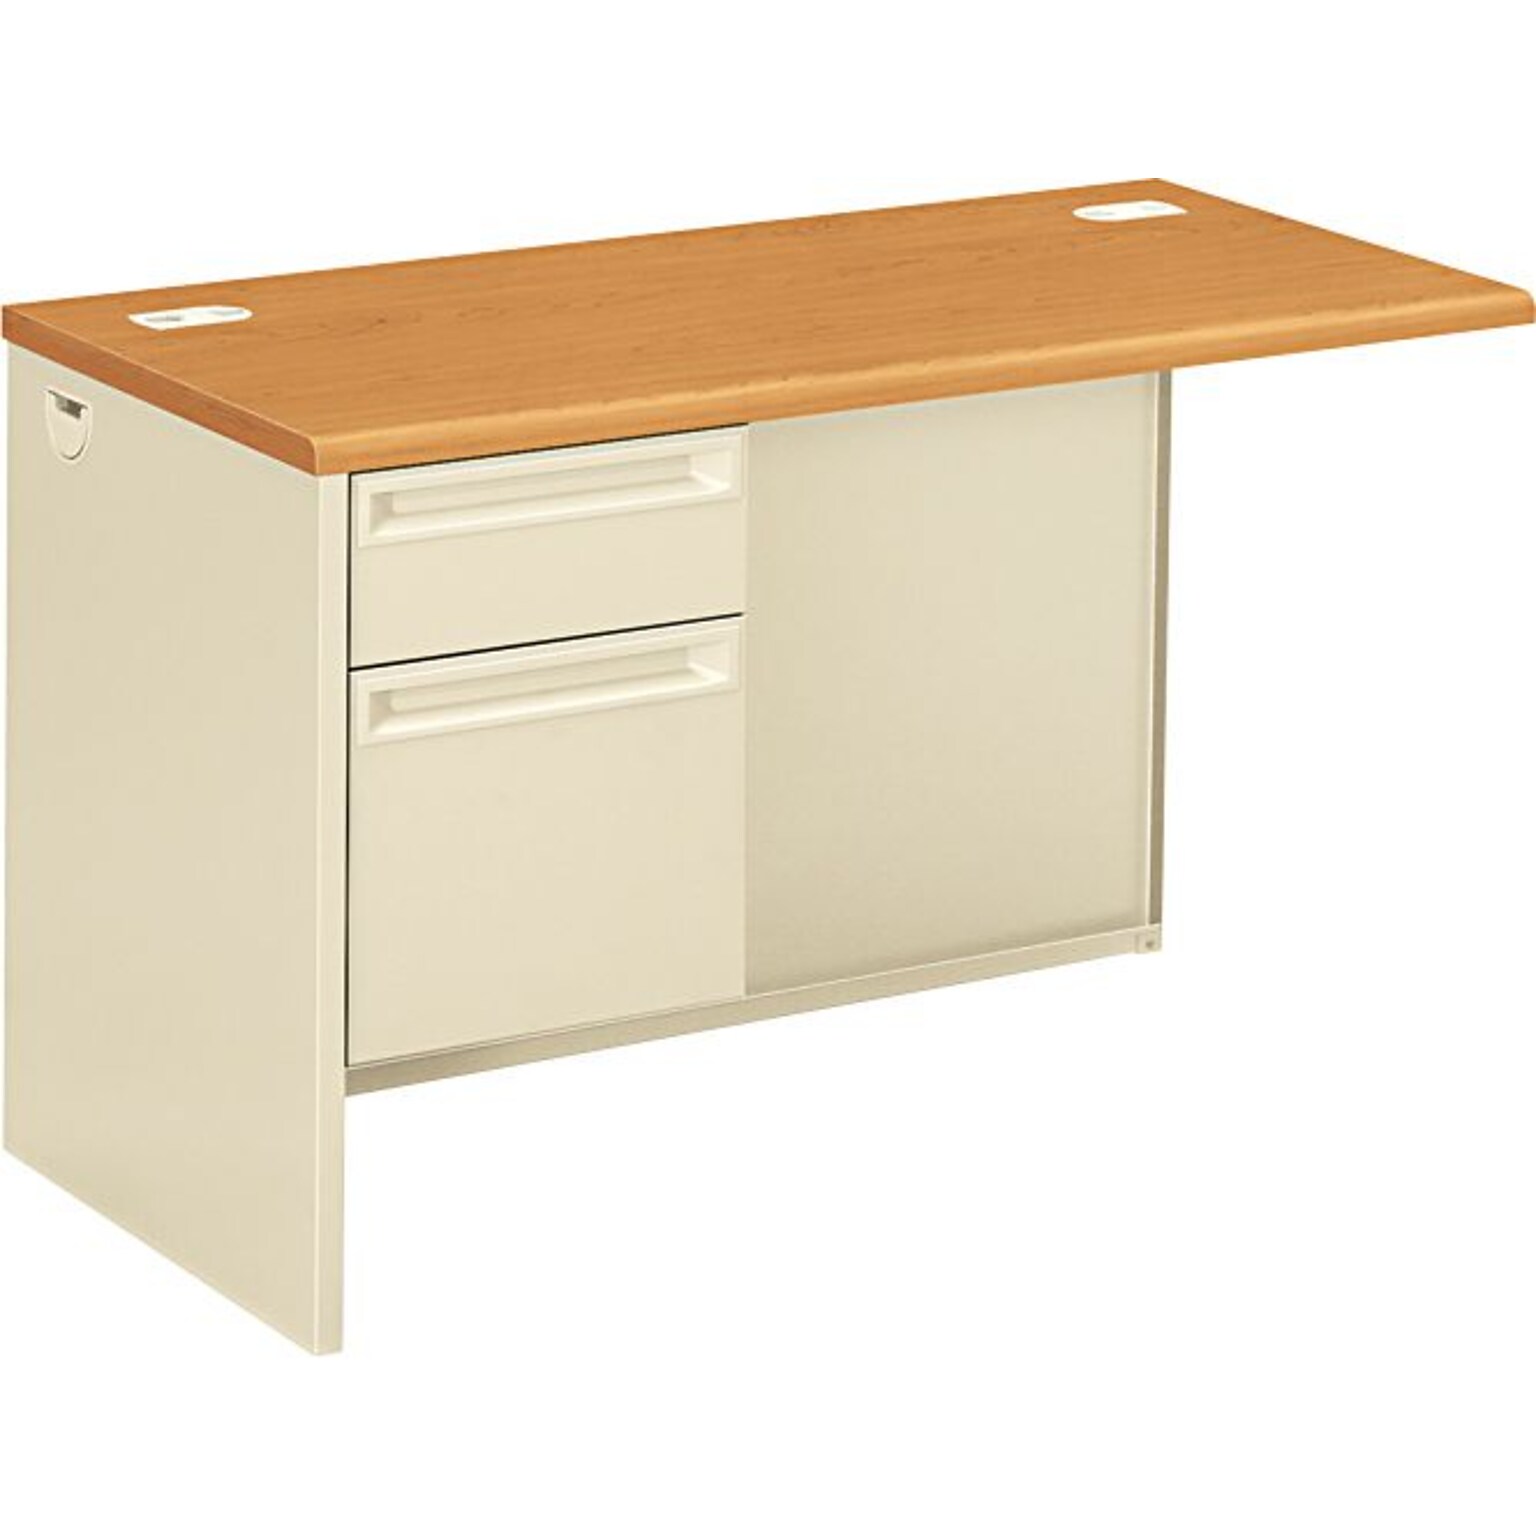 HON 38000 Series 48W Steel Single Pedestal Desk w/Flush Left Return, Box/File w/Lock, Harvest/Putty (HON38216LCL)